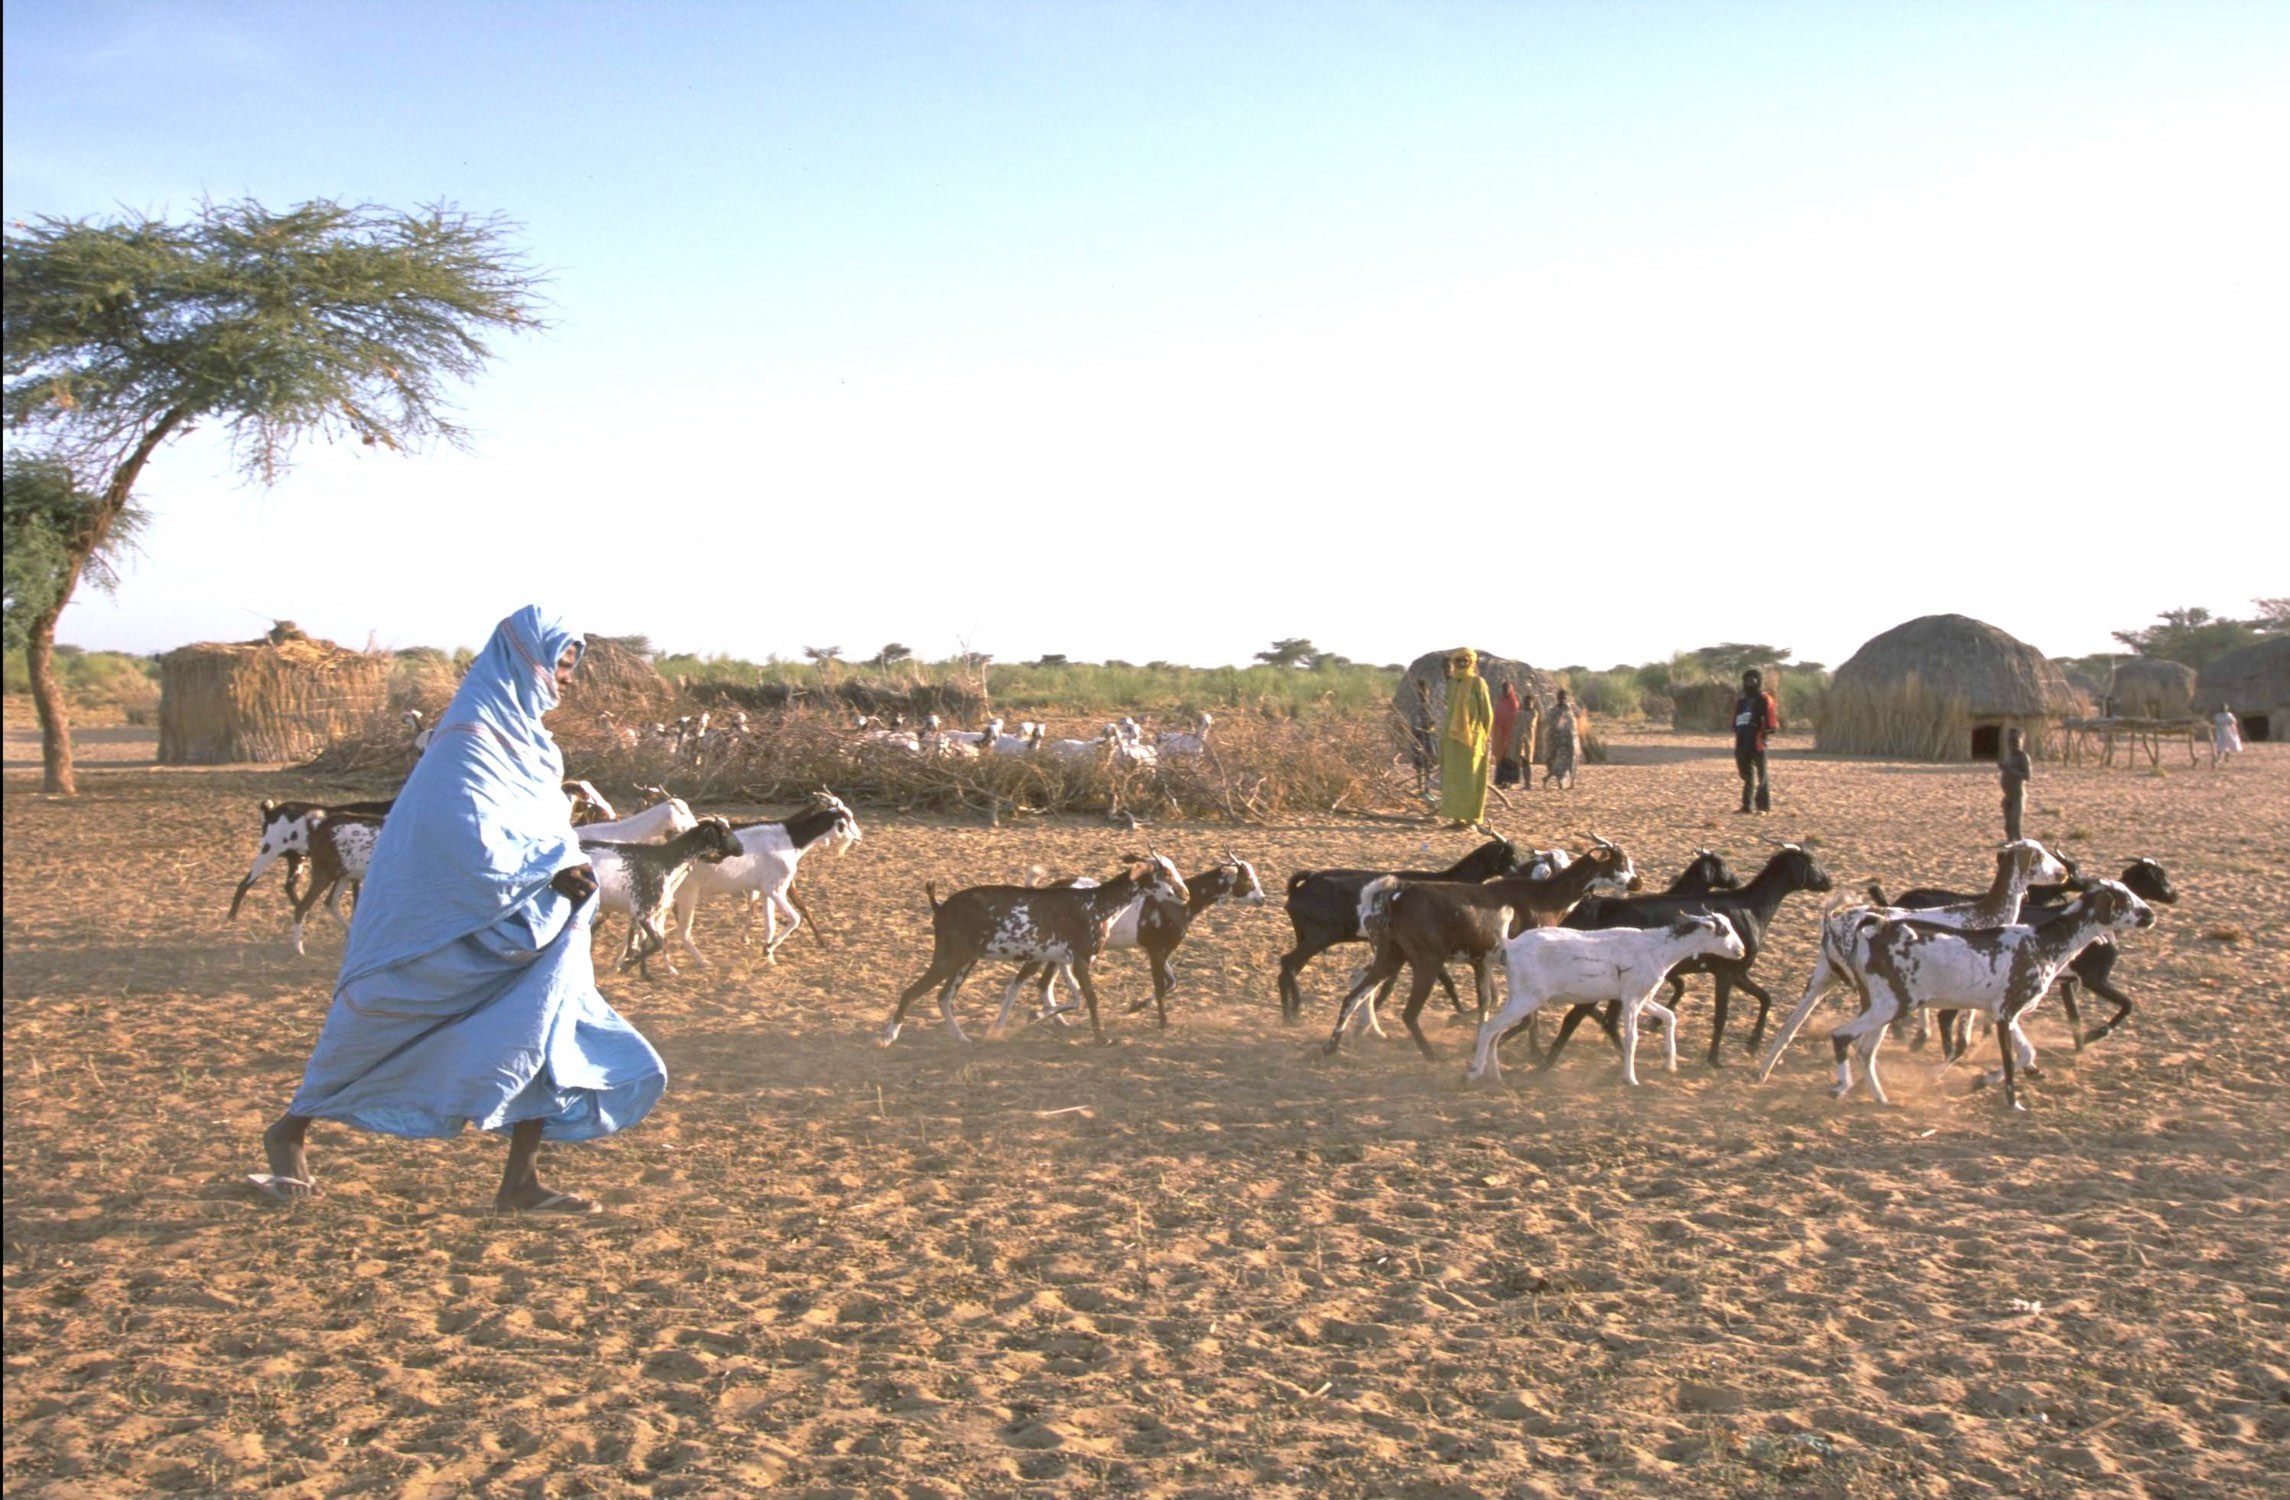 A herd of livestock in Mali's Bambara region.